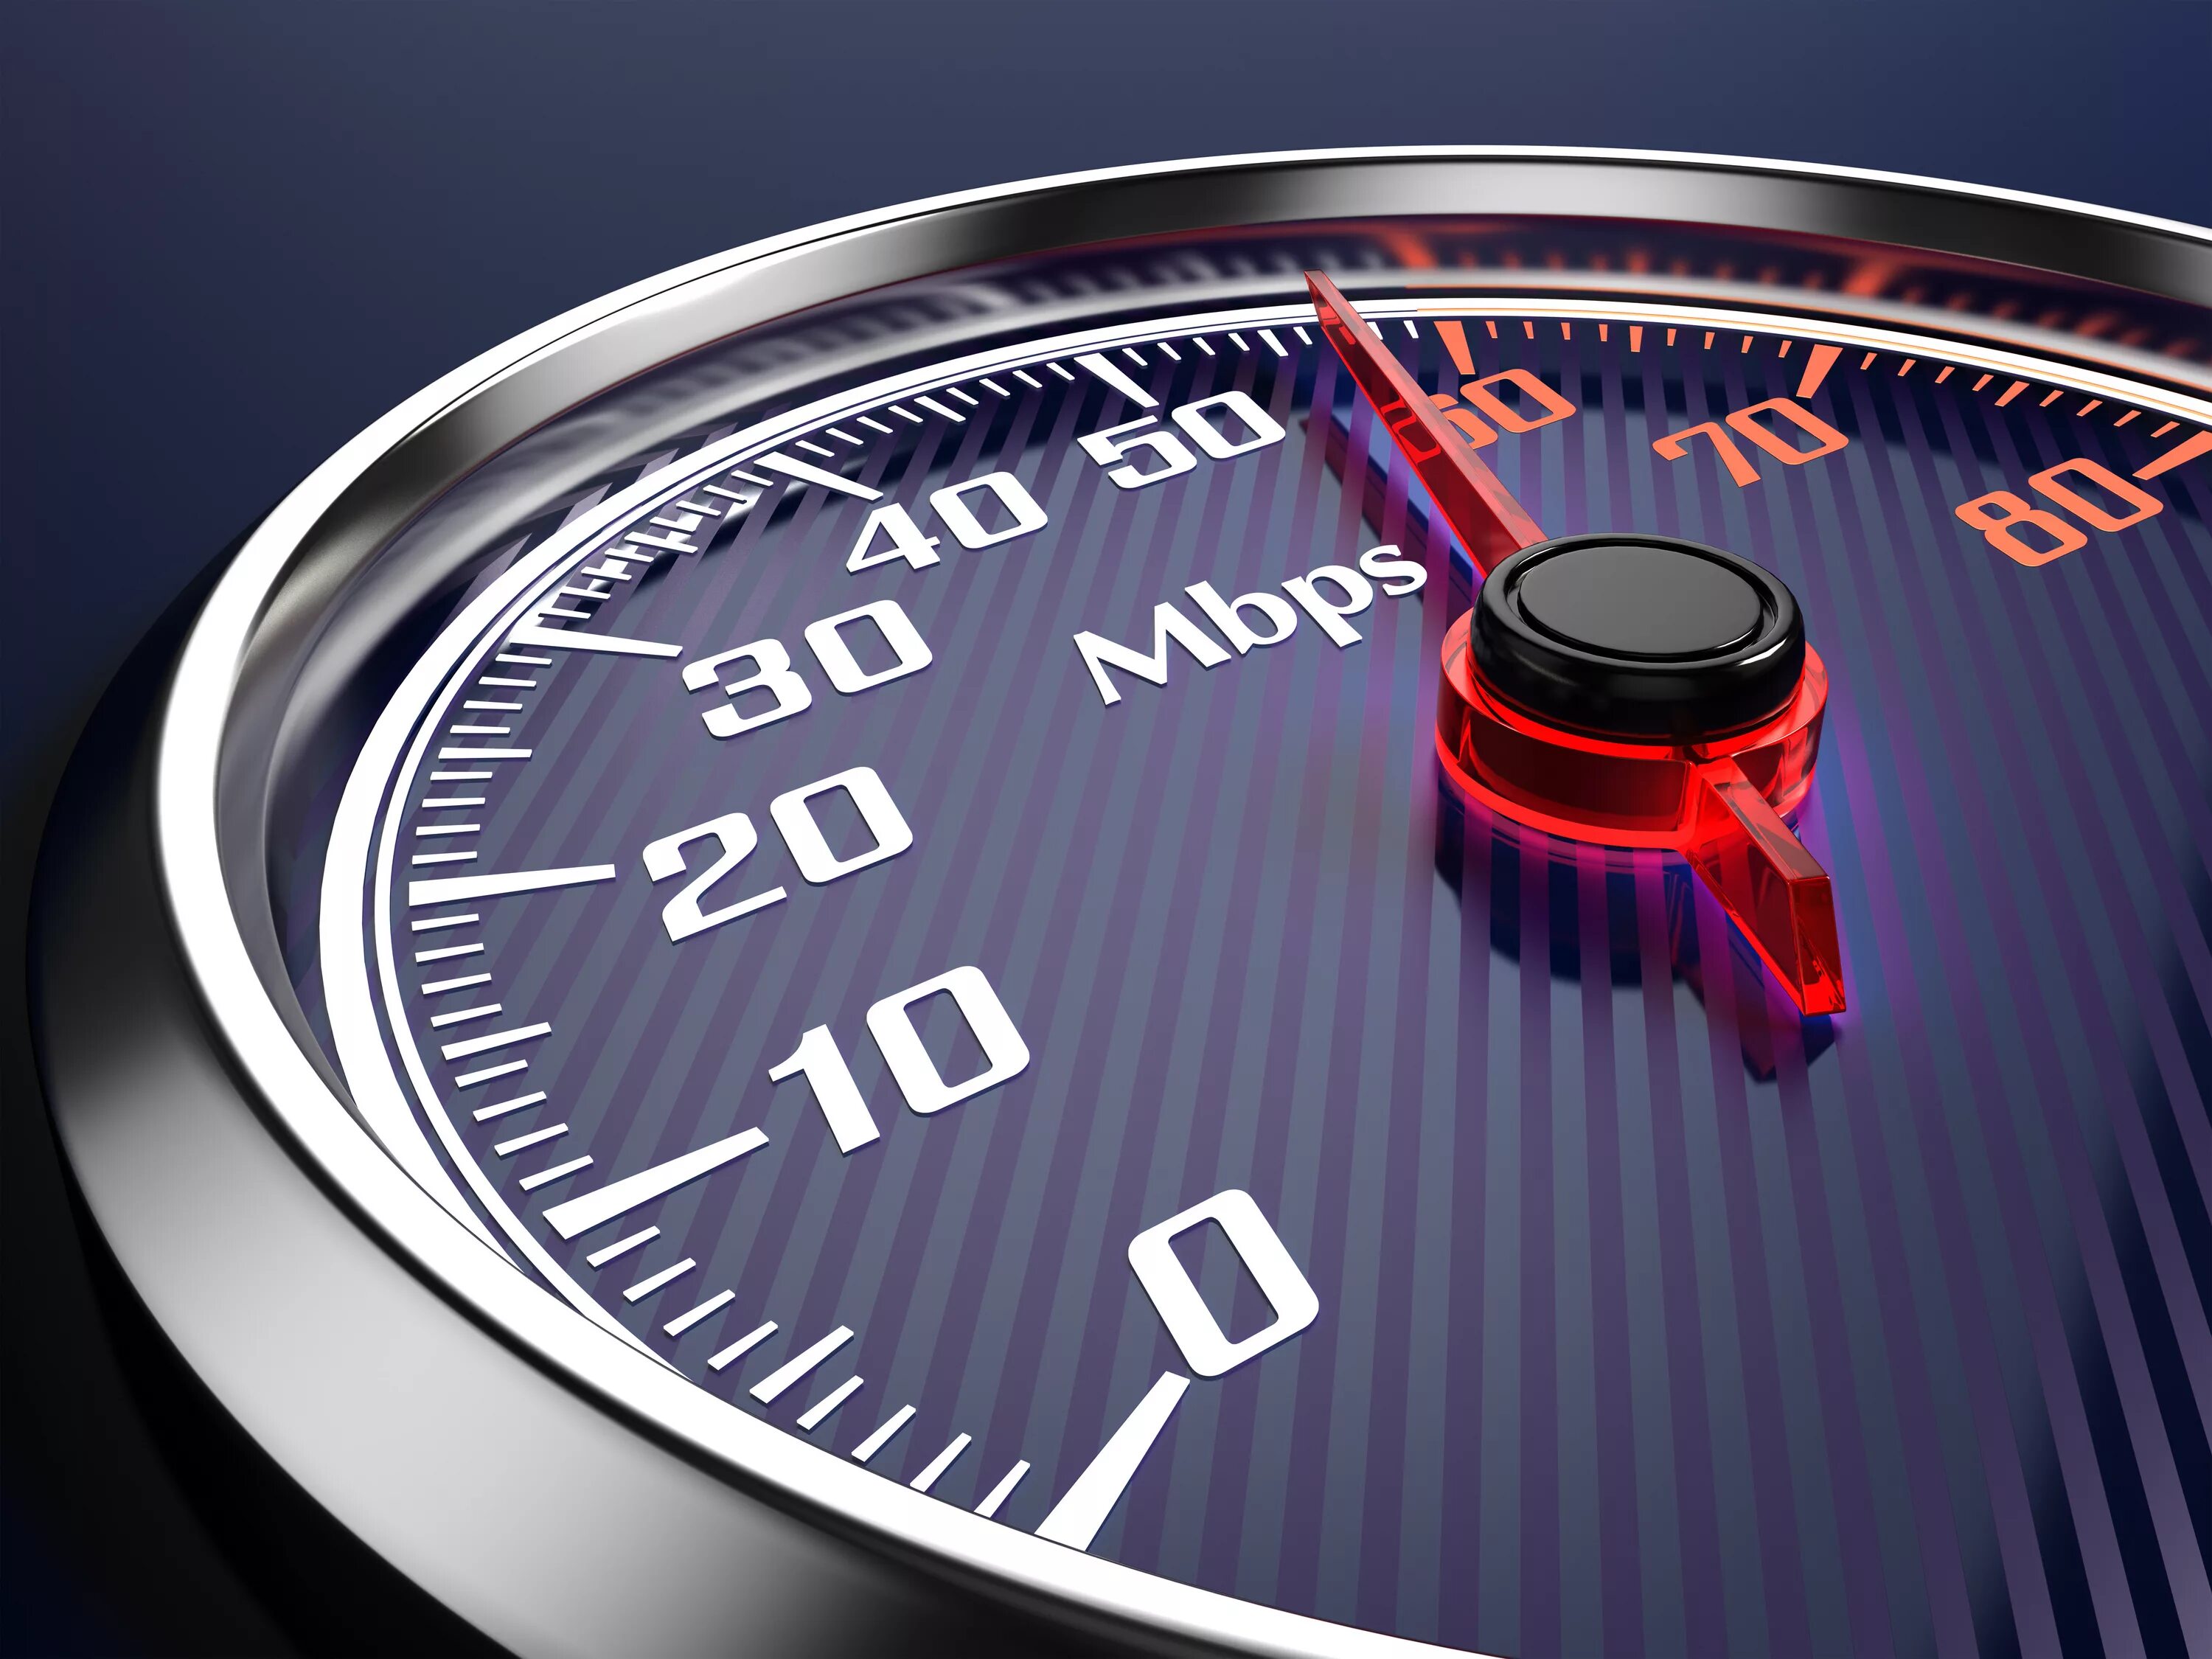 Купить быстрый интернет. Спидометр интернета. Скоростной интернет. Скорость интернета картинки. Скорость Speed.